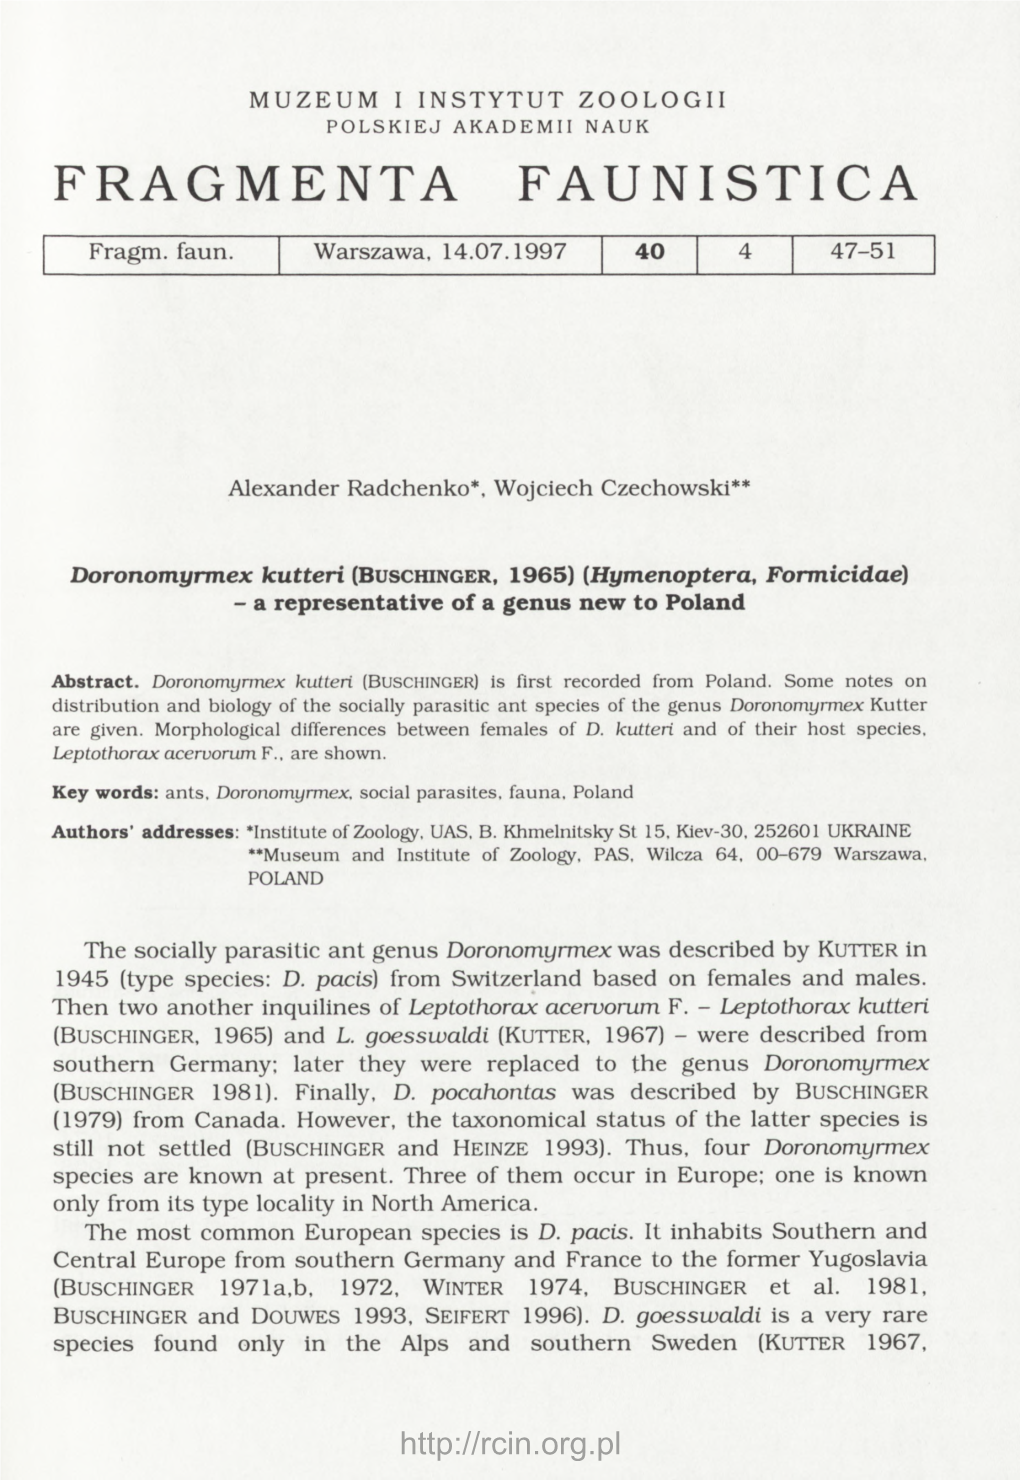 Doronomyrmex Kutteri (Buschinger, 1965) (Hymenoptera, Formicidae